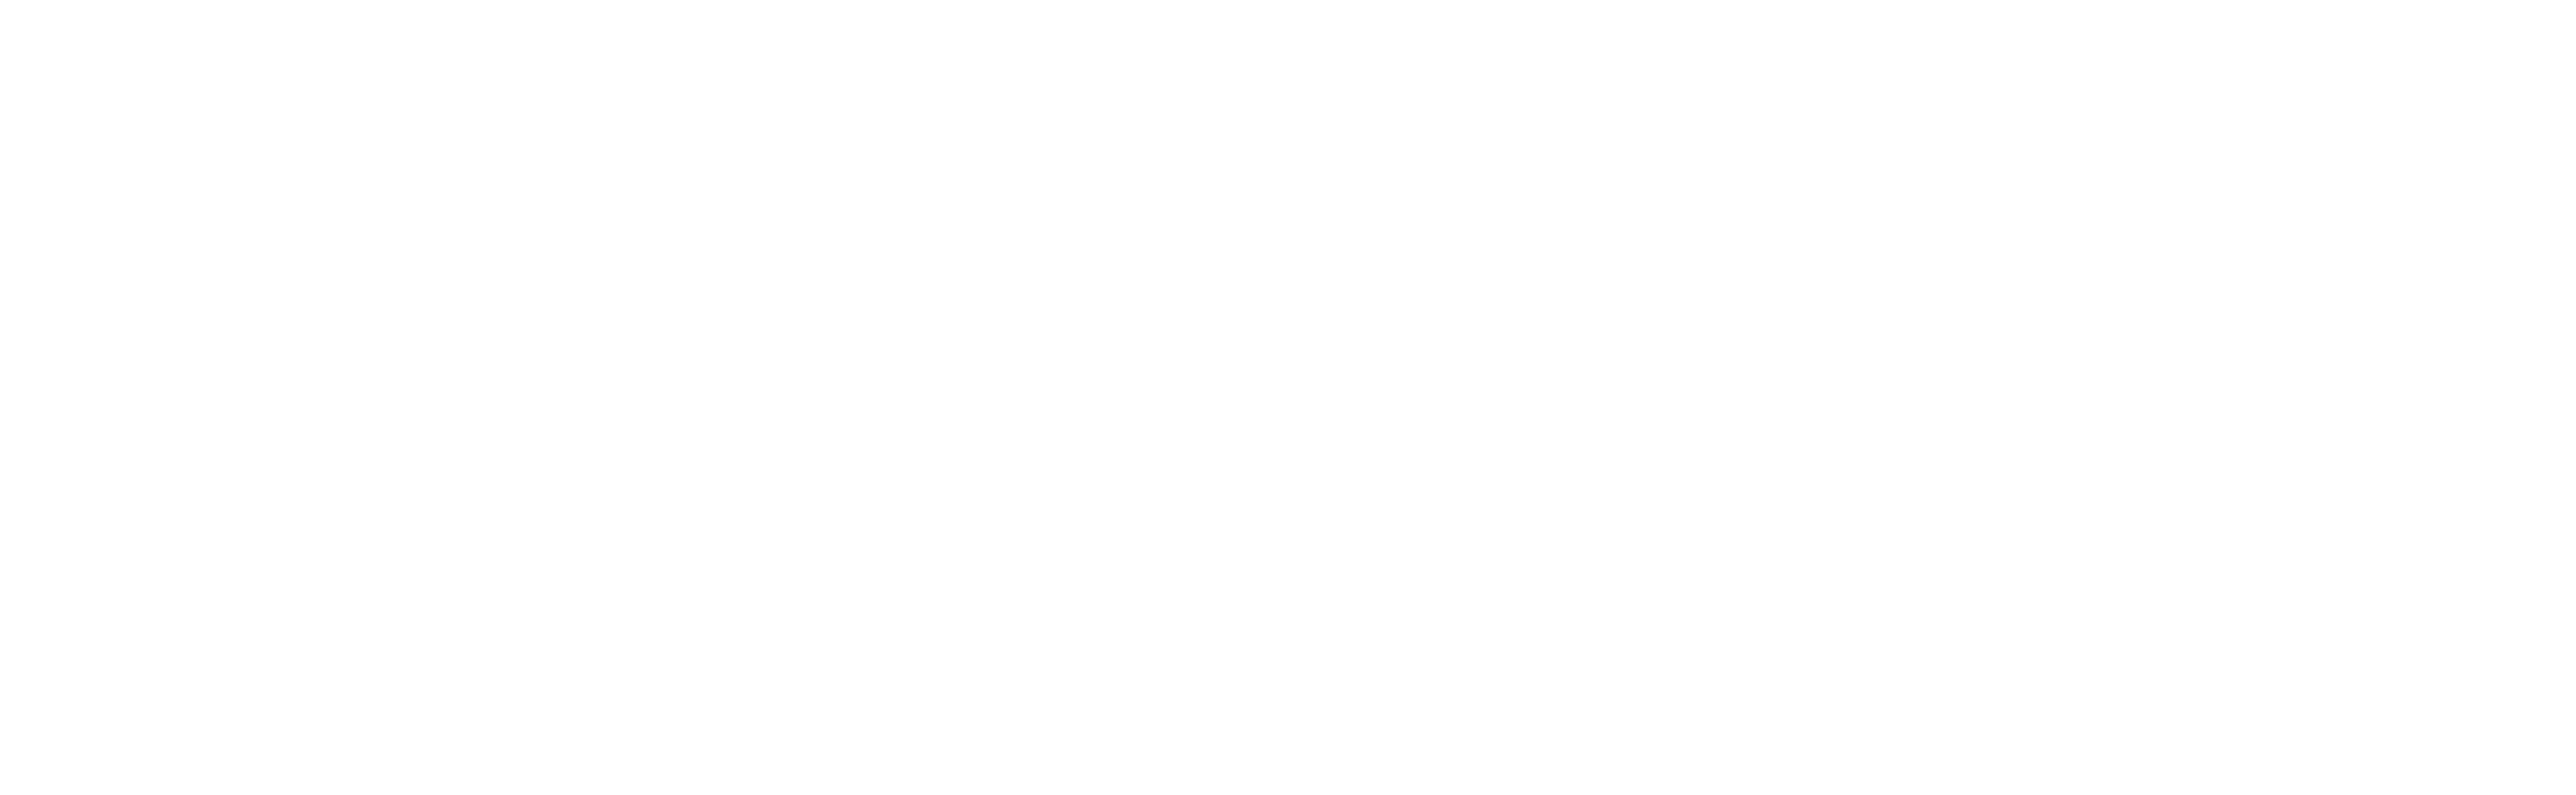 Amplify logo 2021